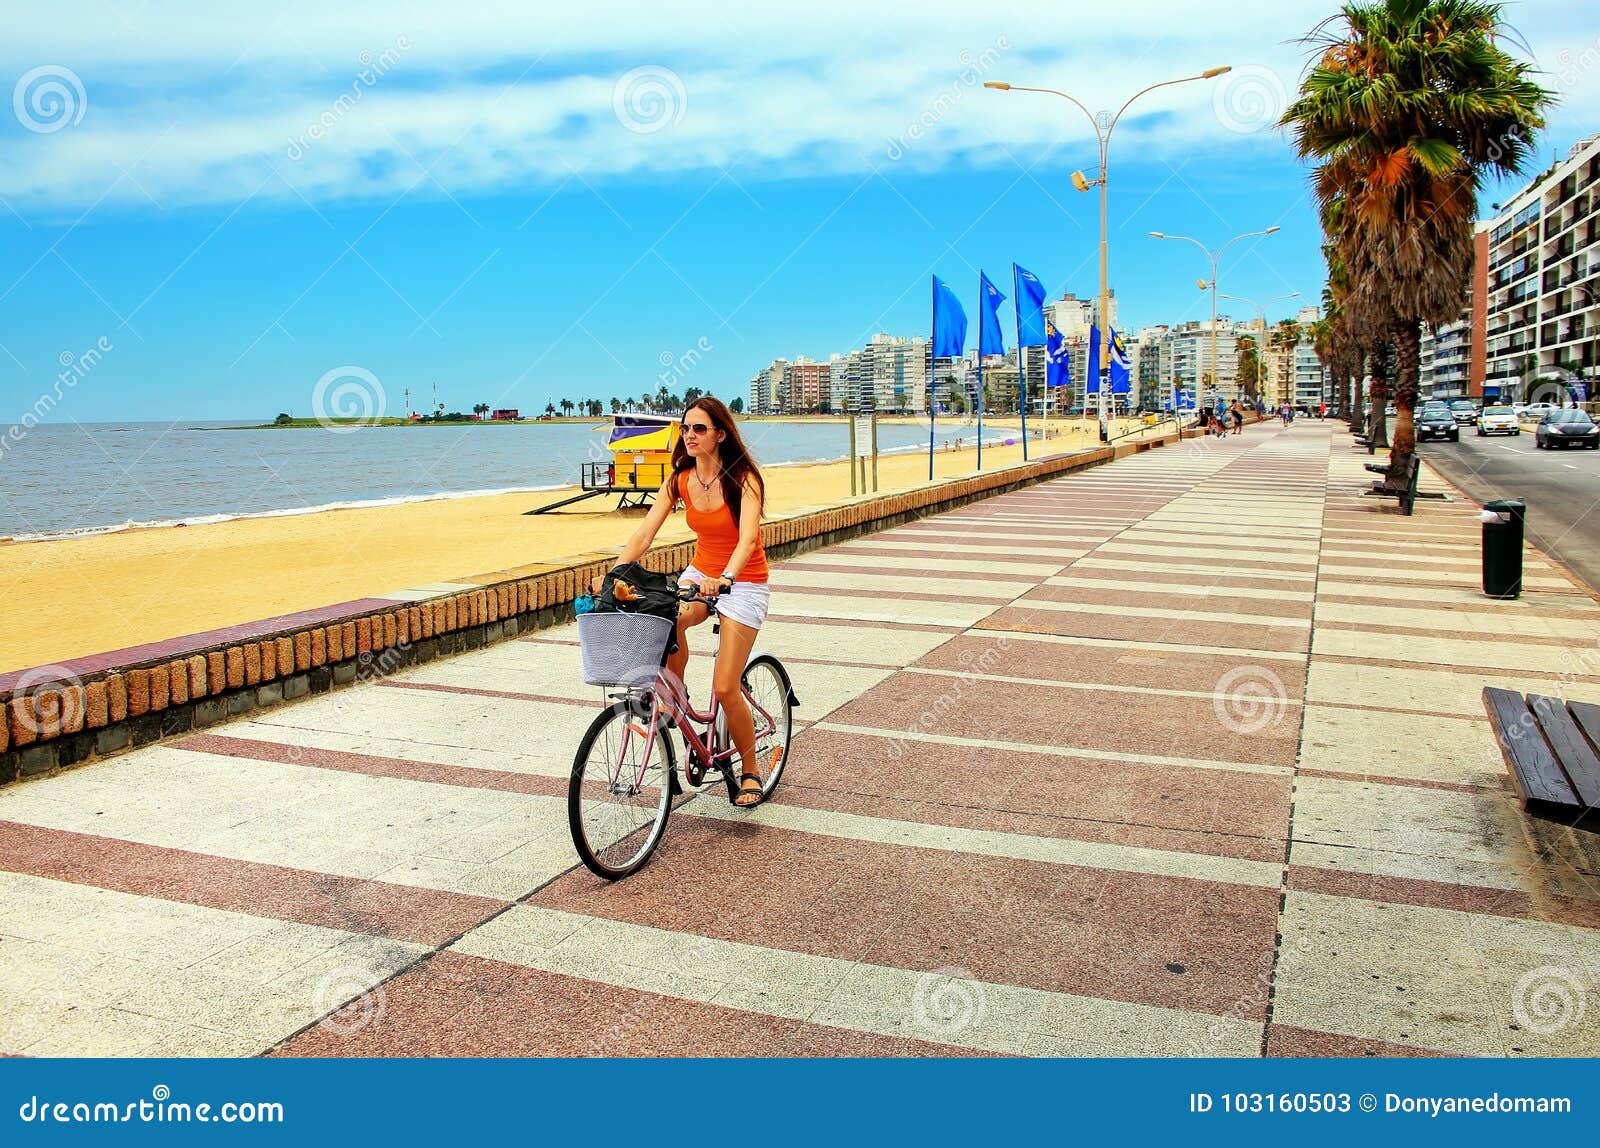 woman biking on the boulevard along pocitos beach in montevideo, uruguay.